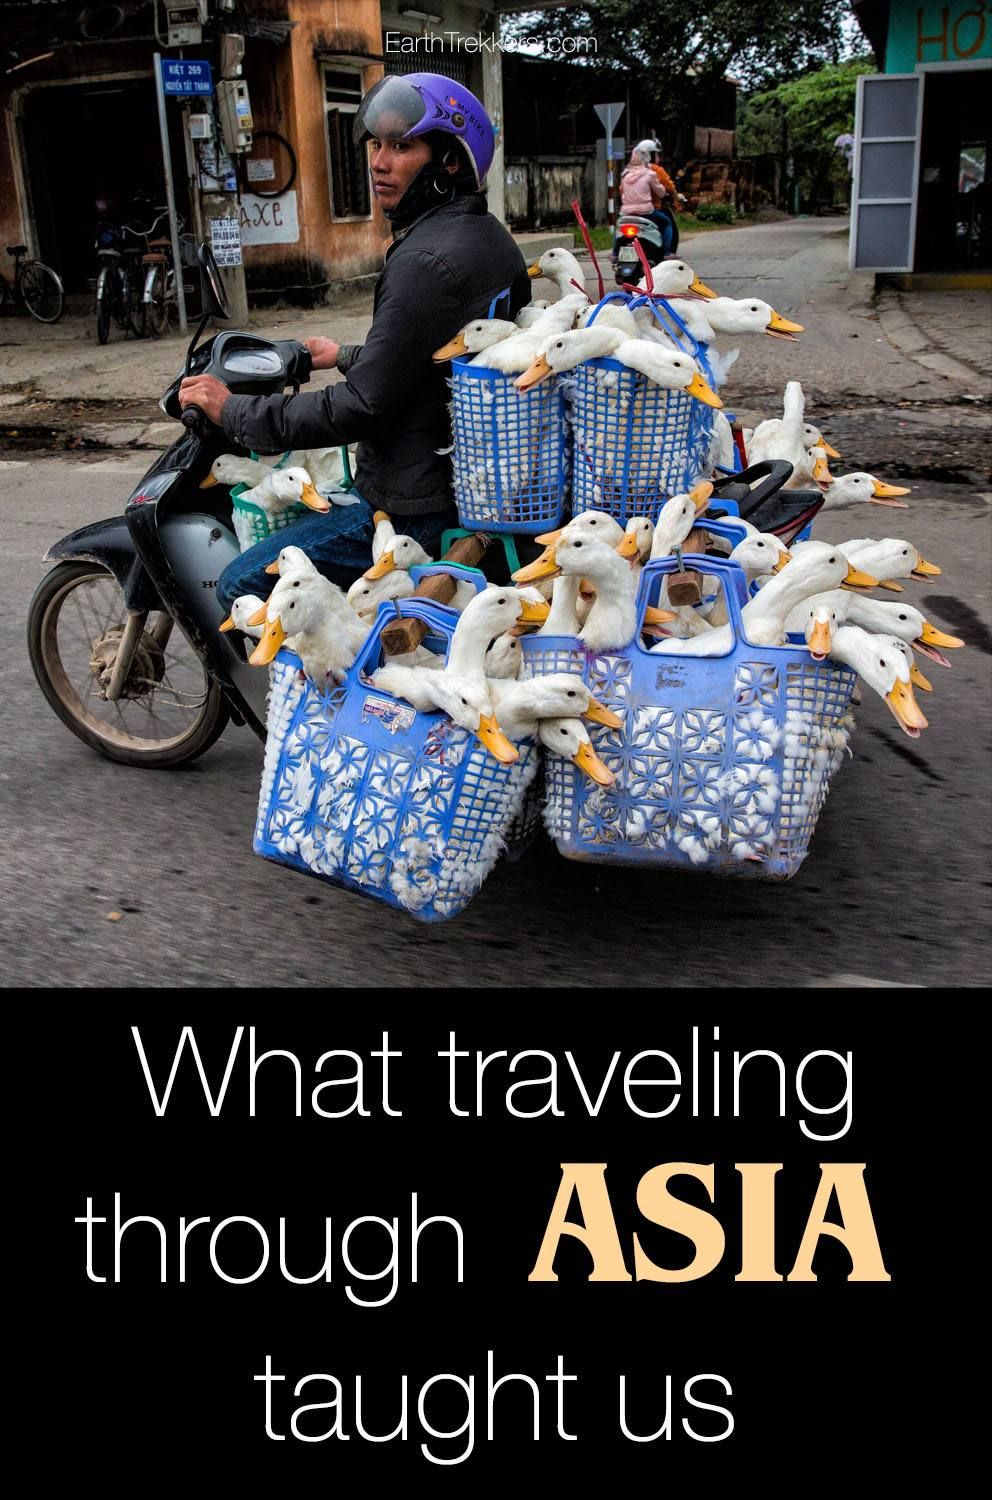 Traveling through Asia